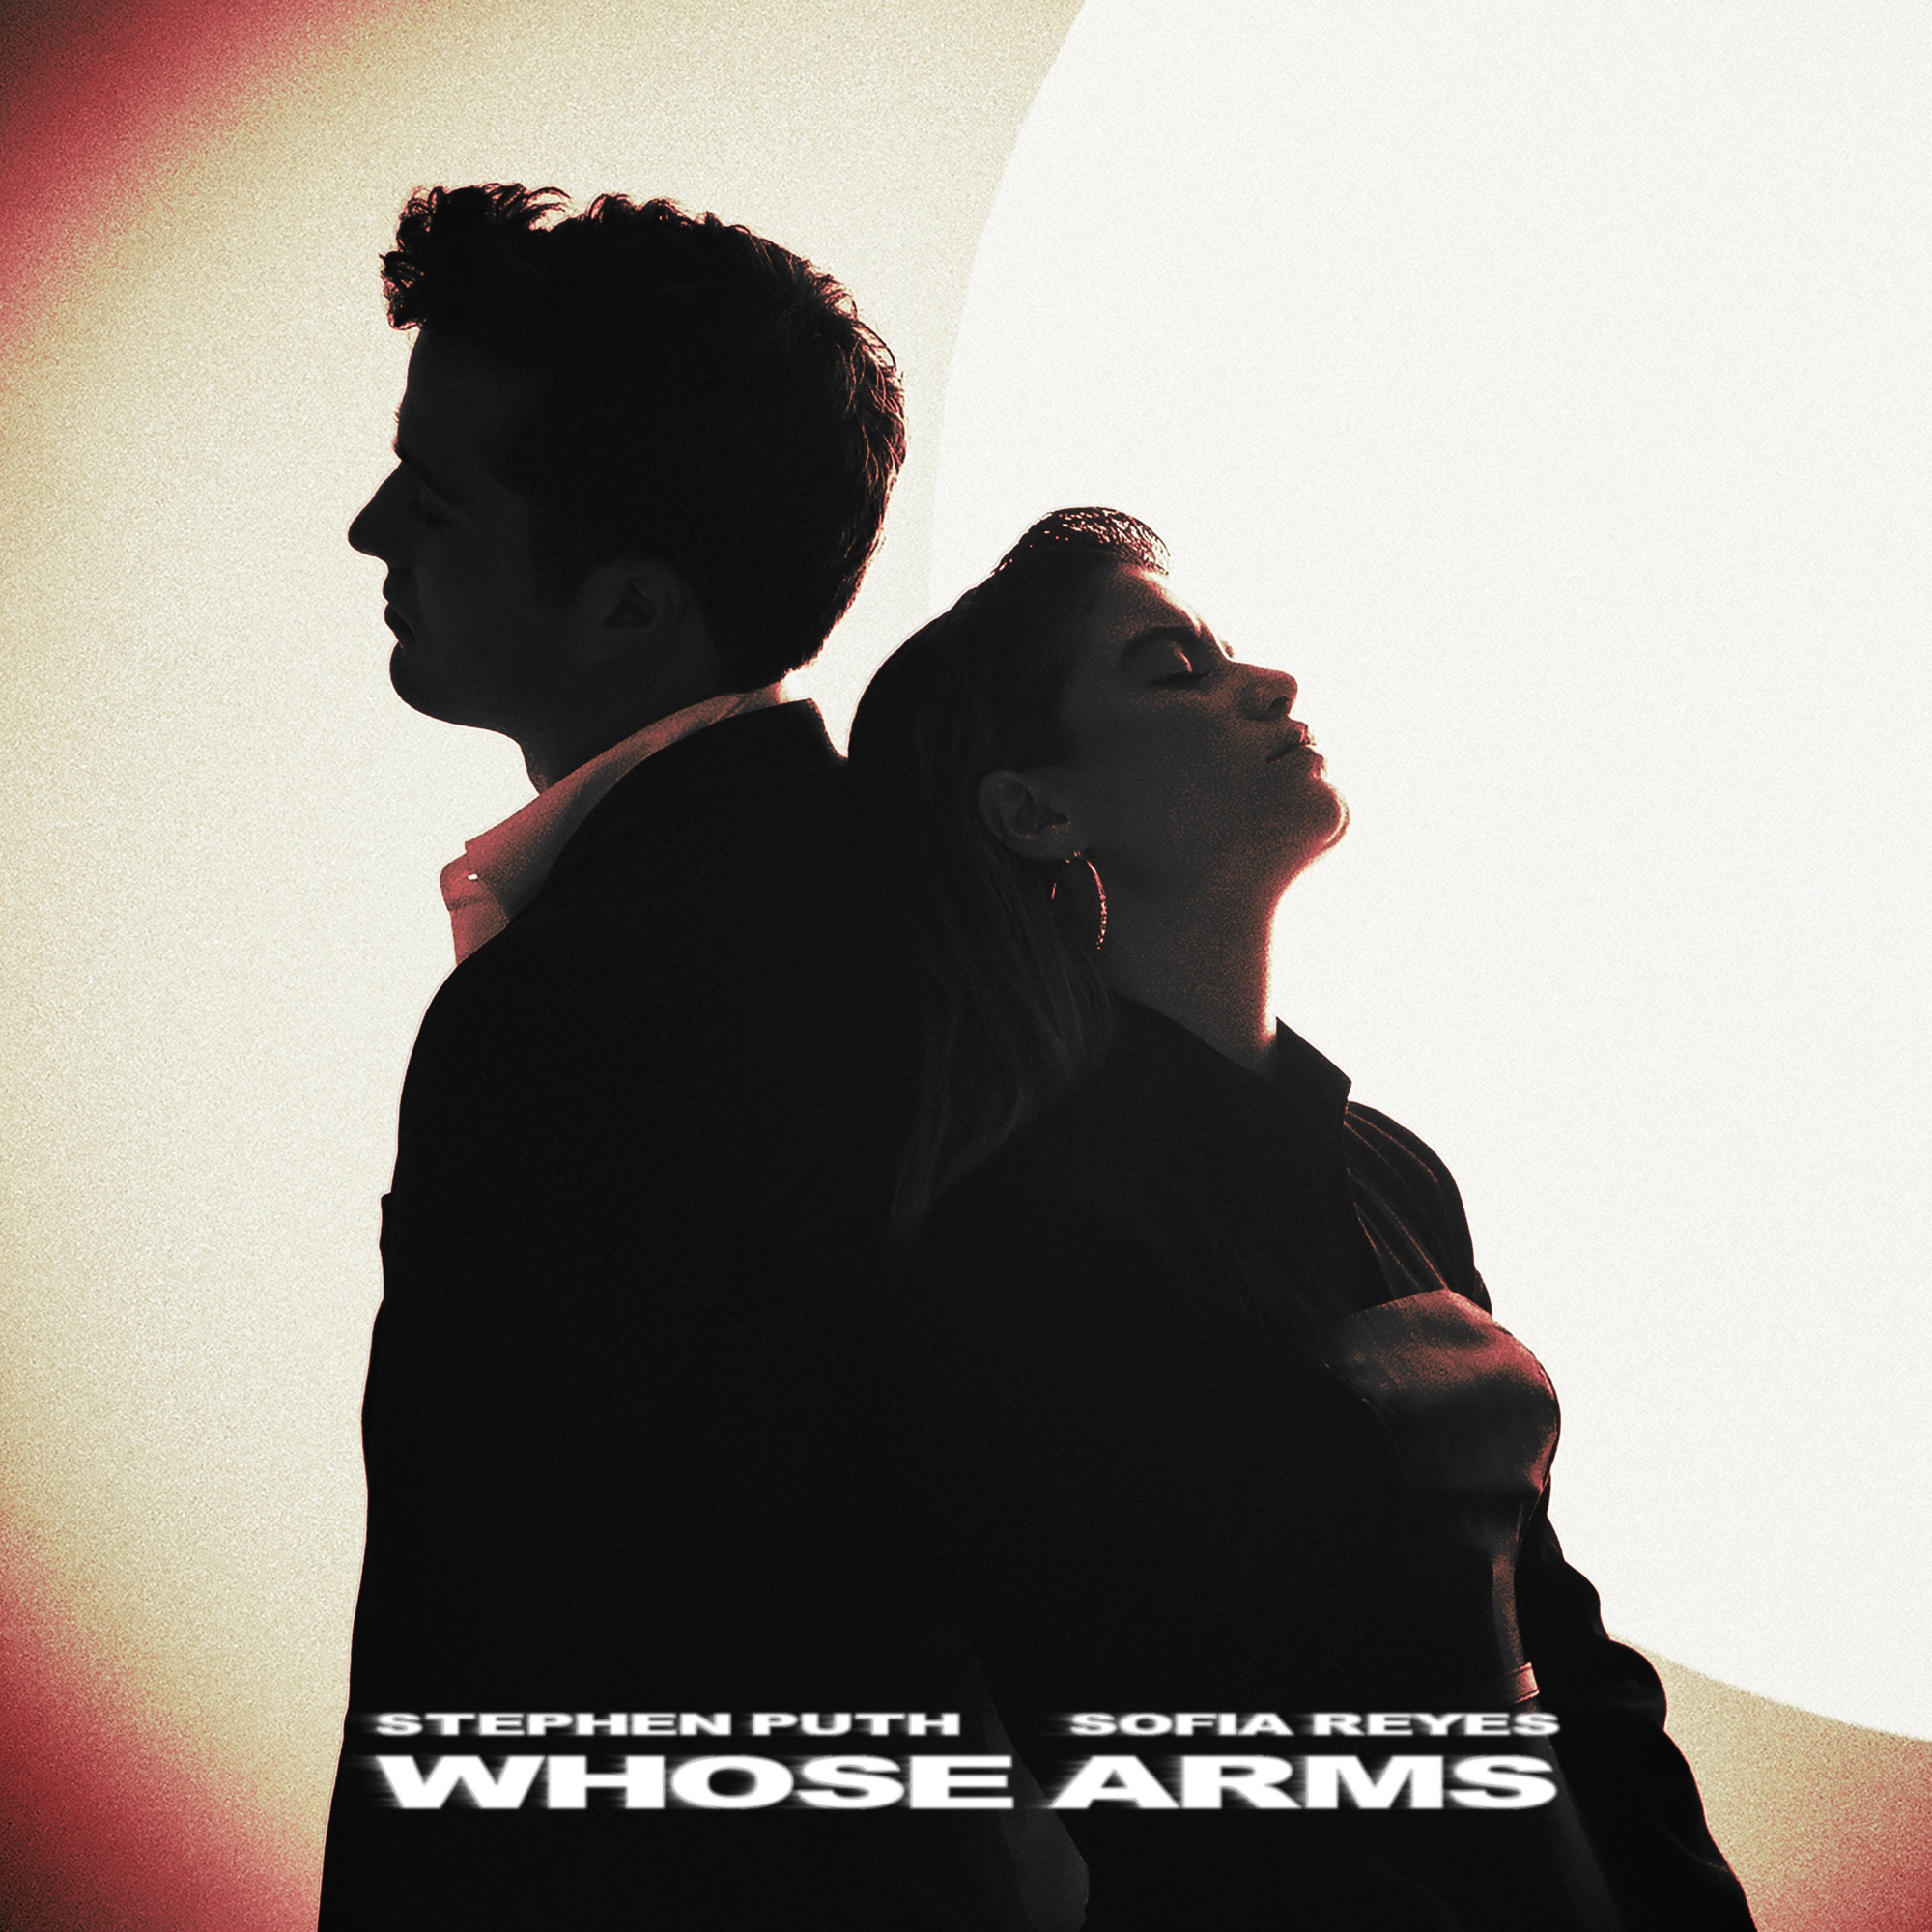 Stephen Puth - Whose Arms (feat. Sofia Reyes) - Single